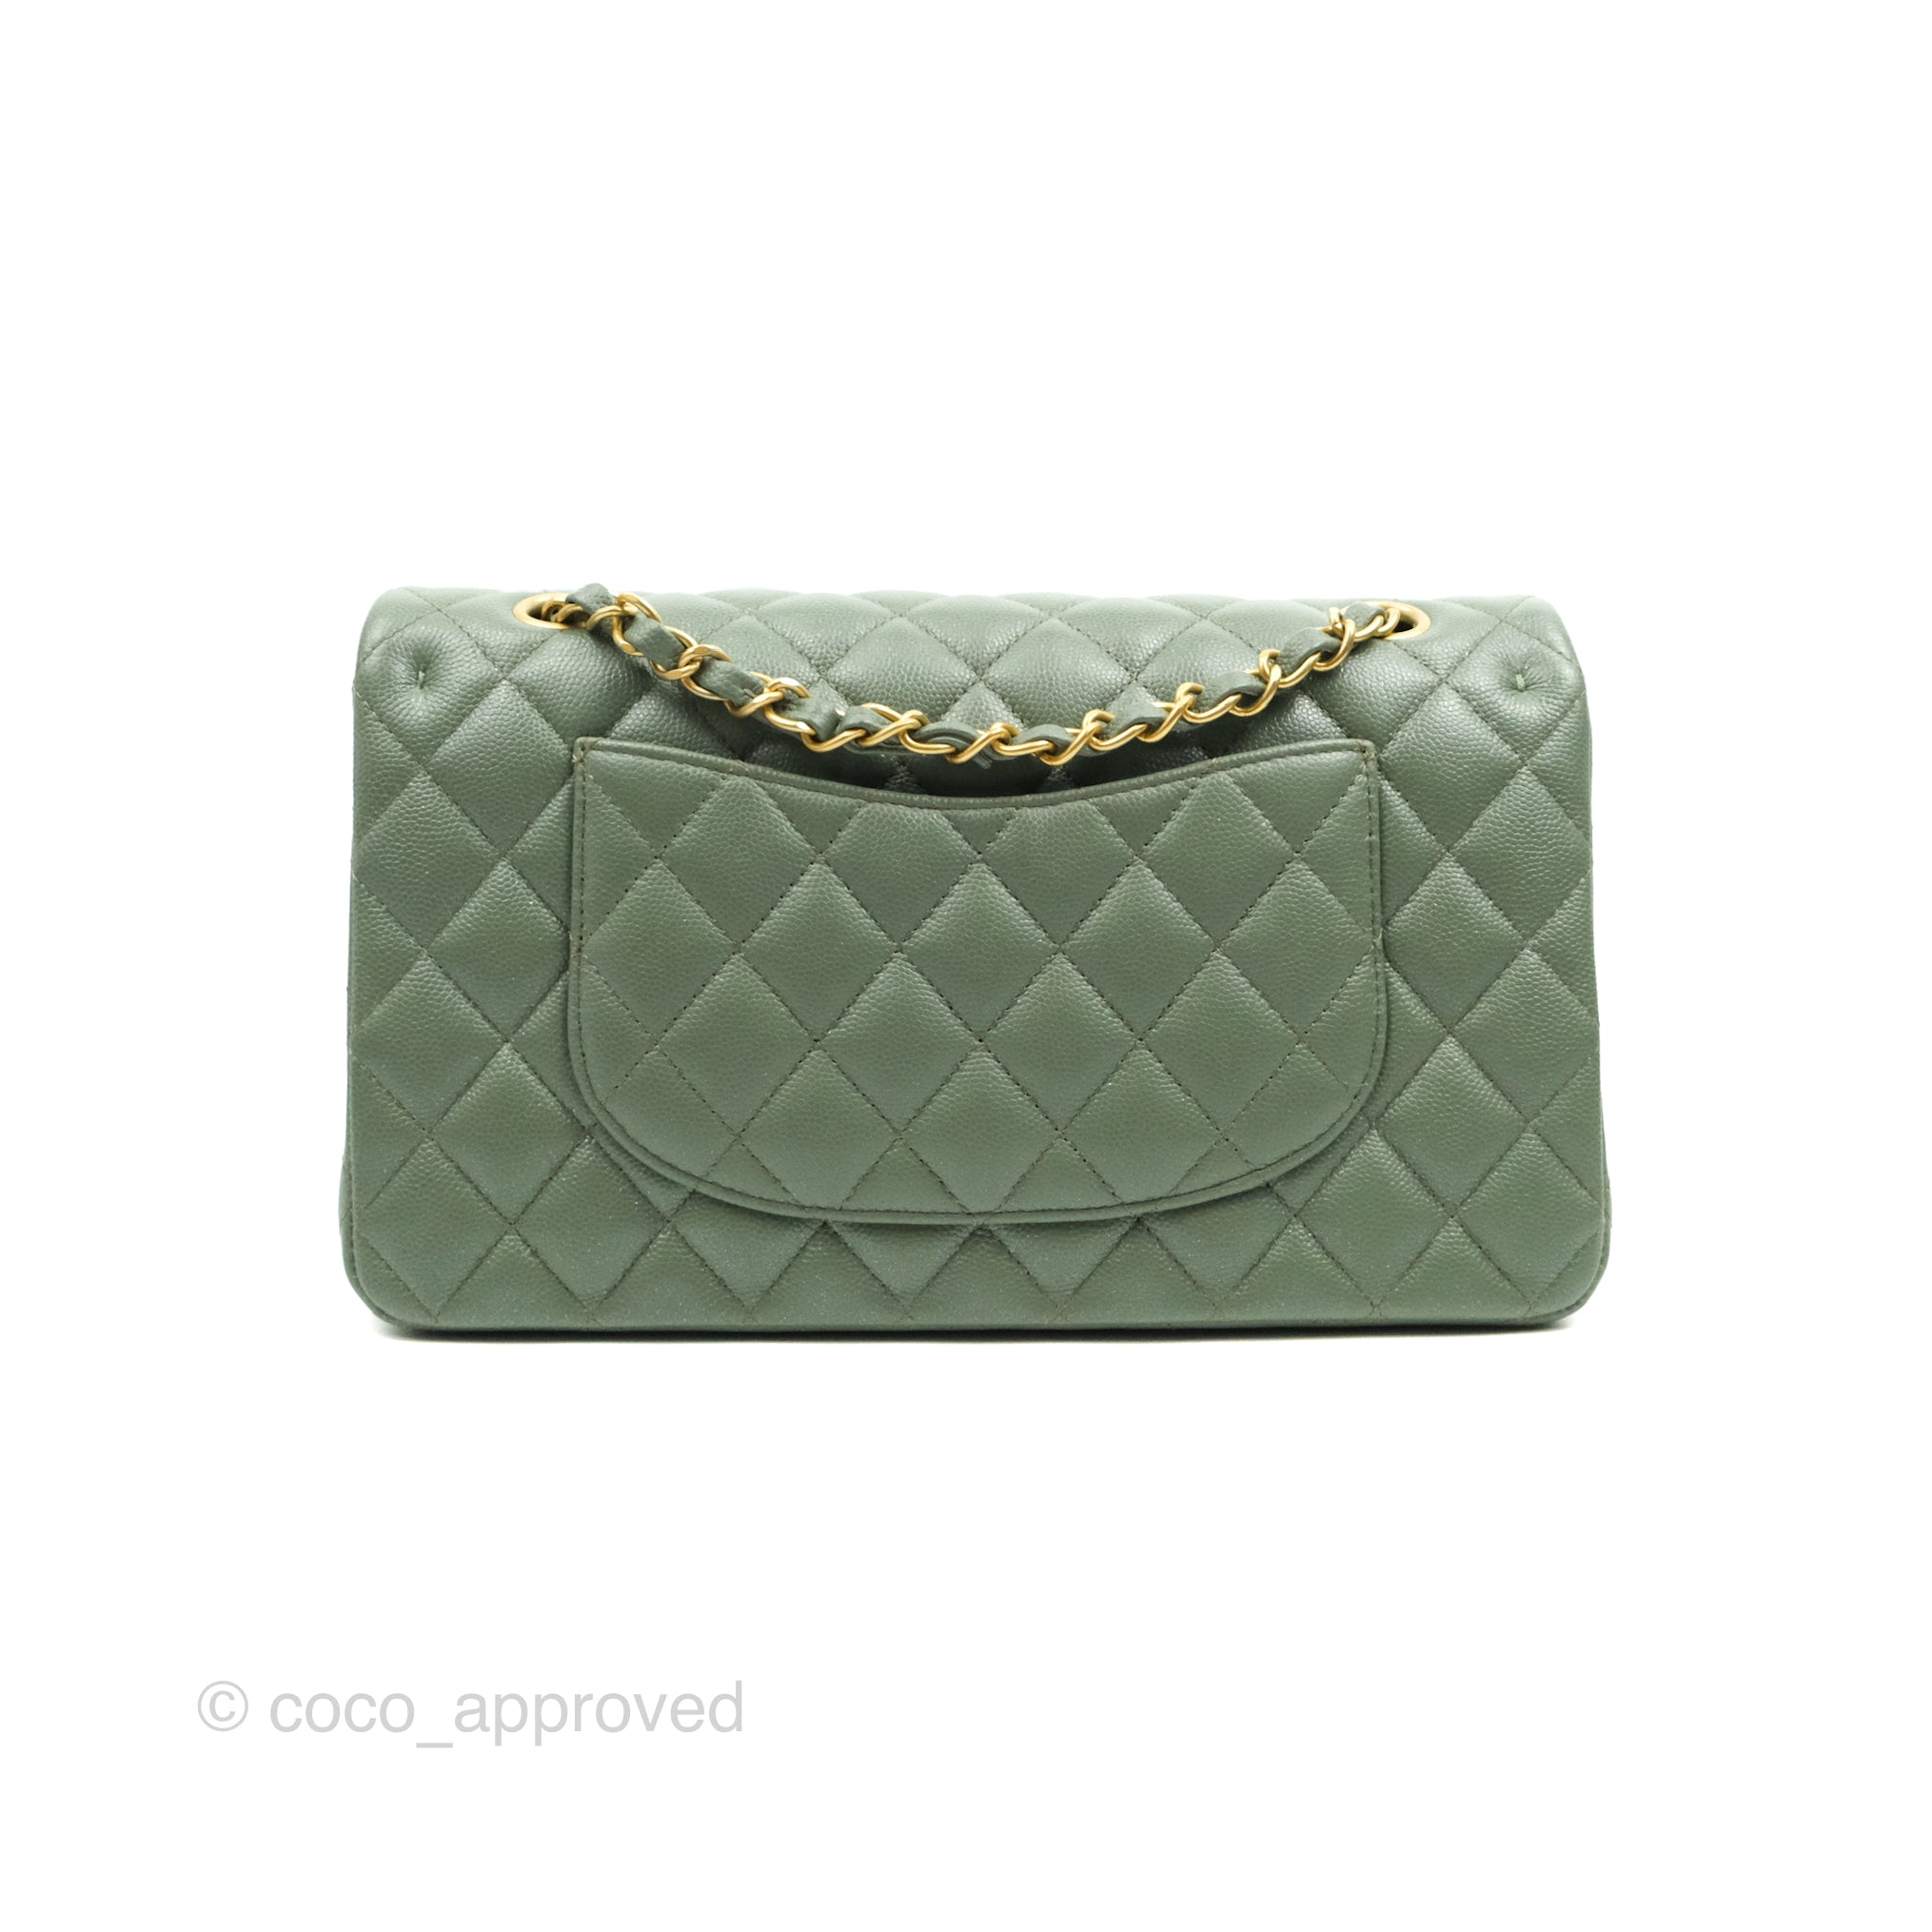 Chanel 22P WOC, Caviar, Iridescent Green GHW - Laulay Luxury